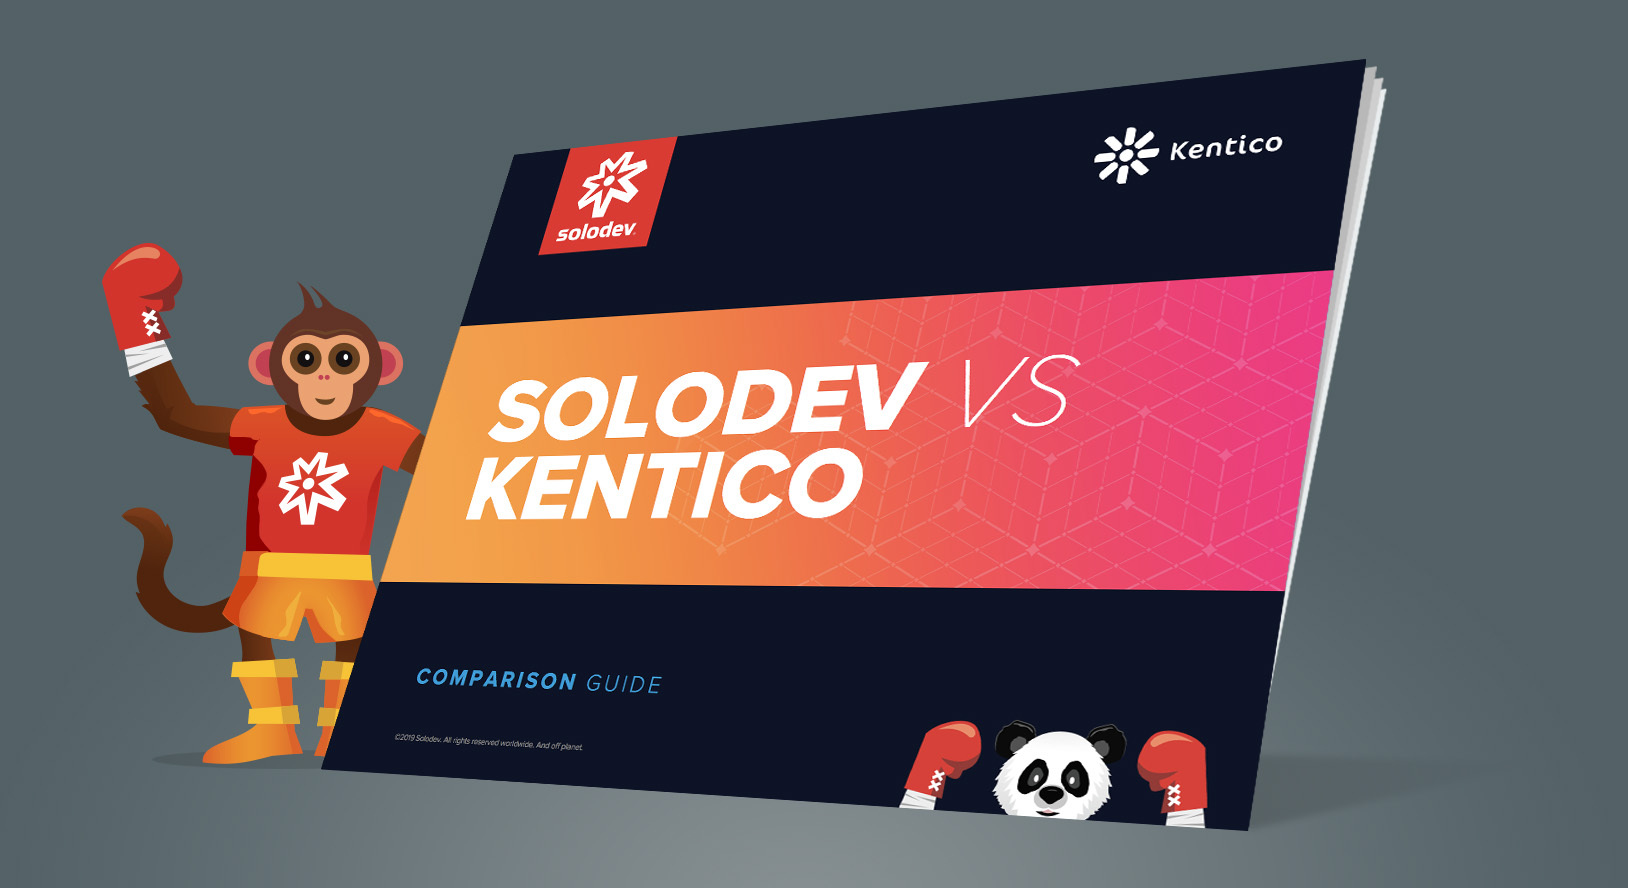 Solodev vs. Kentico: Comparison Guide for CMS Platforms